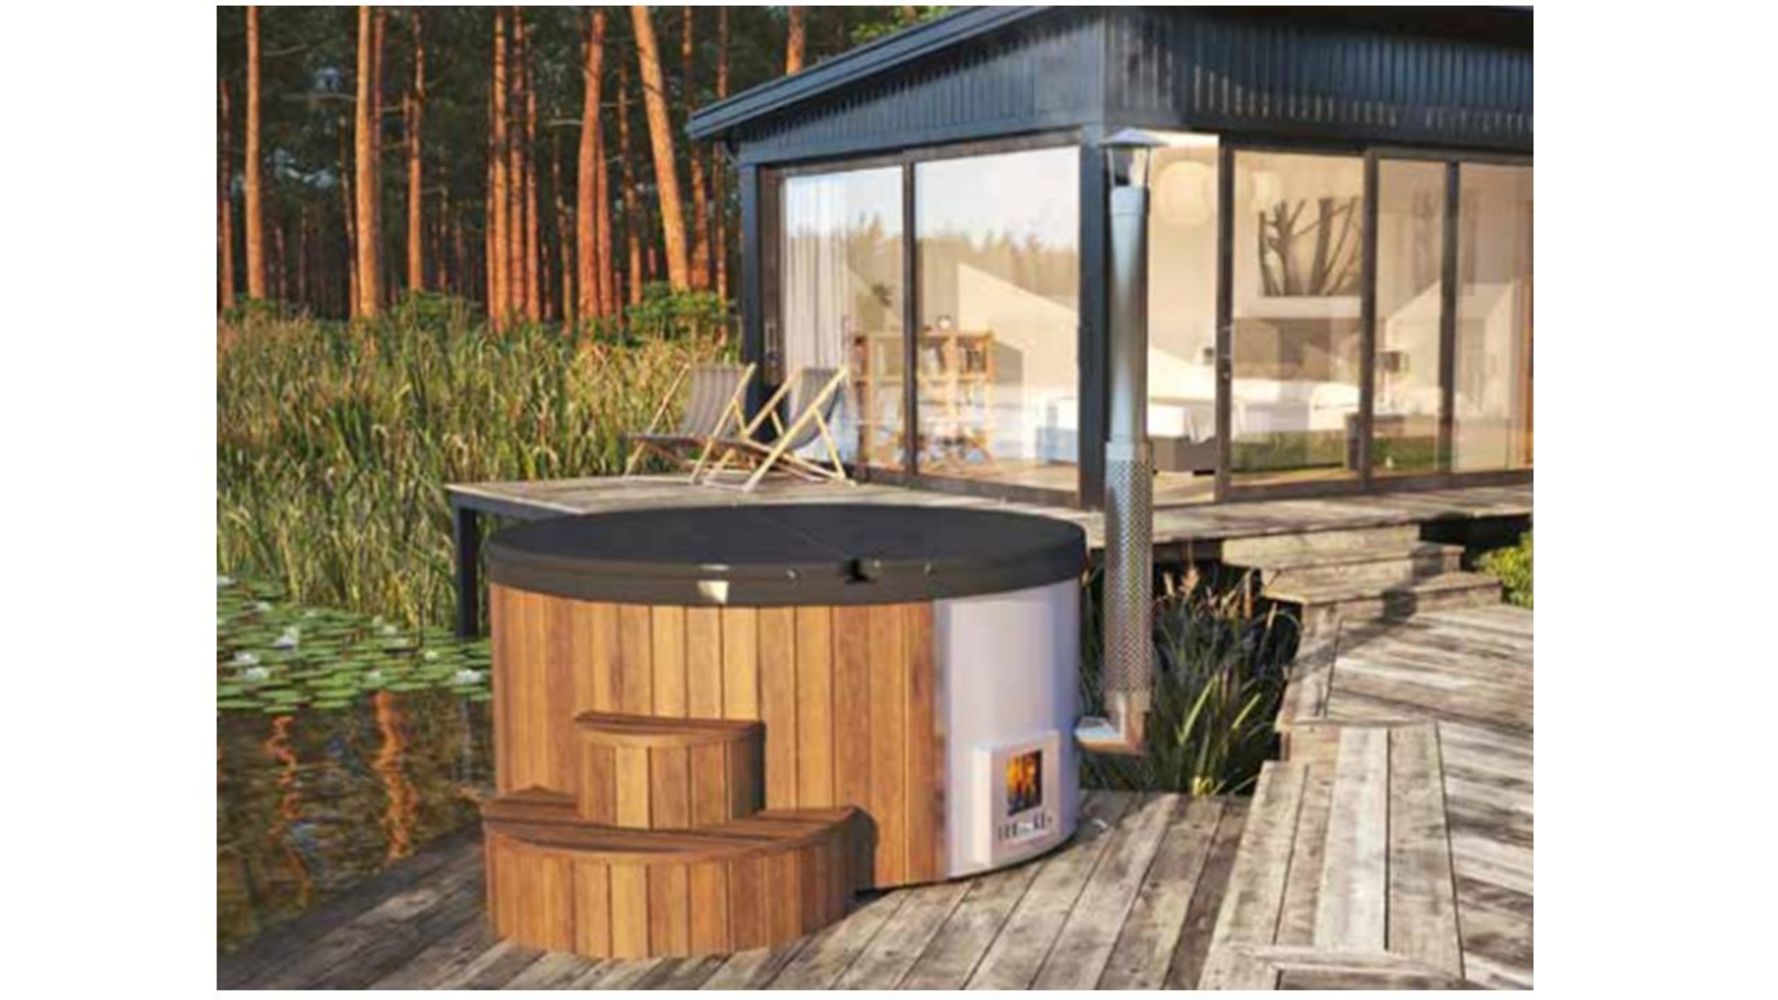 BRAND NEW Luxury Spruce Hot Tubs - Range Of Sizes & Specs + Luxury Garden Co Brand Lines Of Rattan